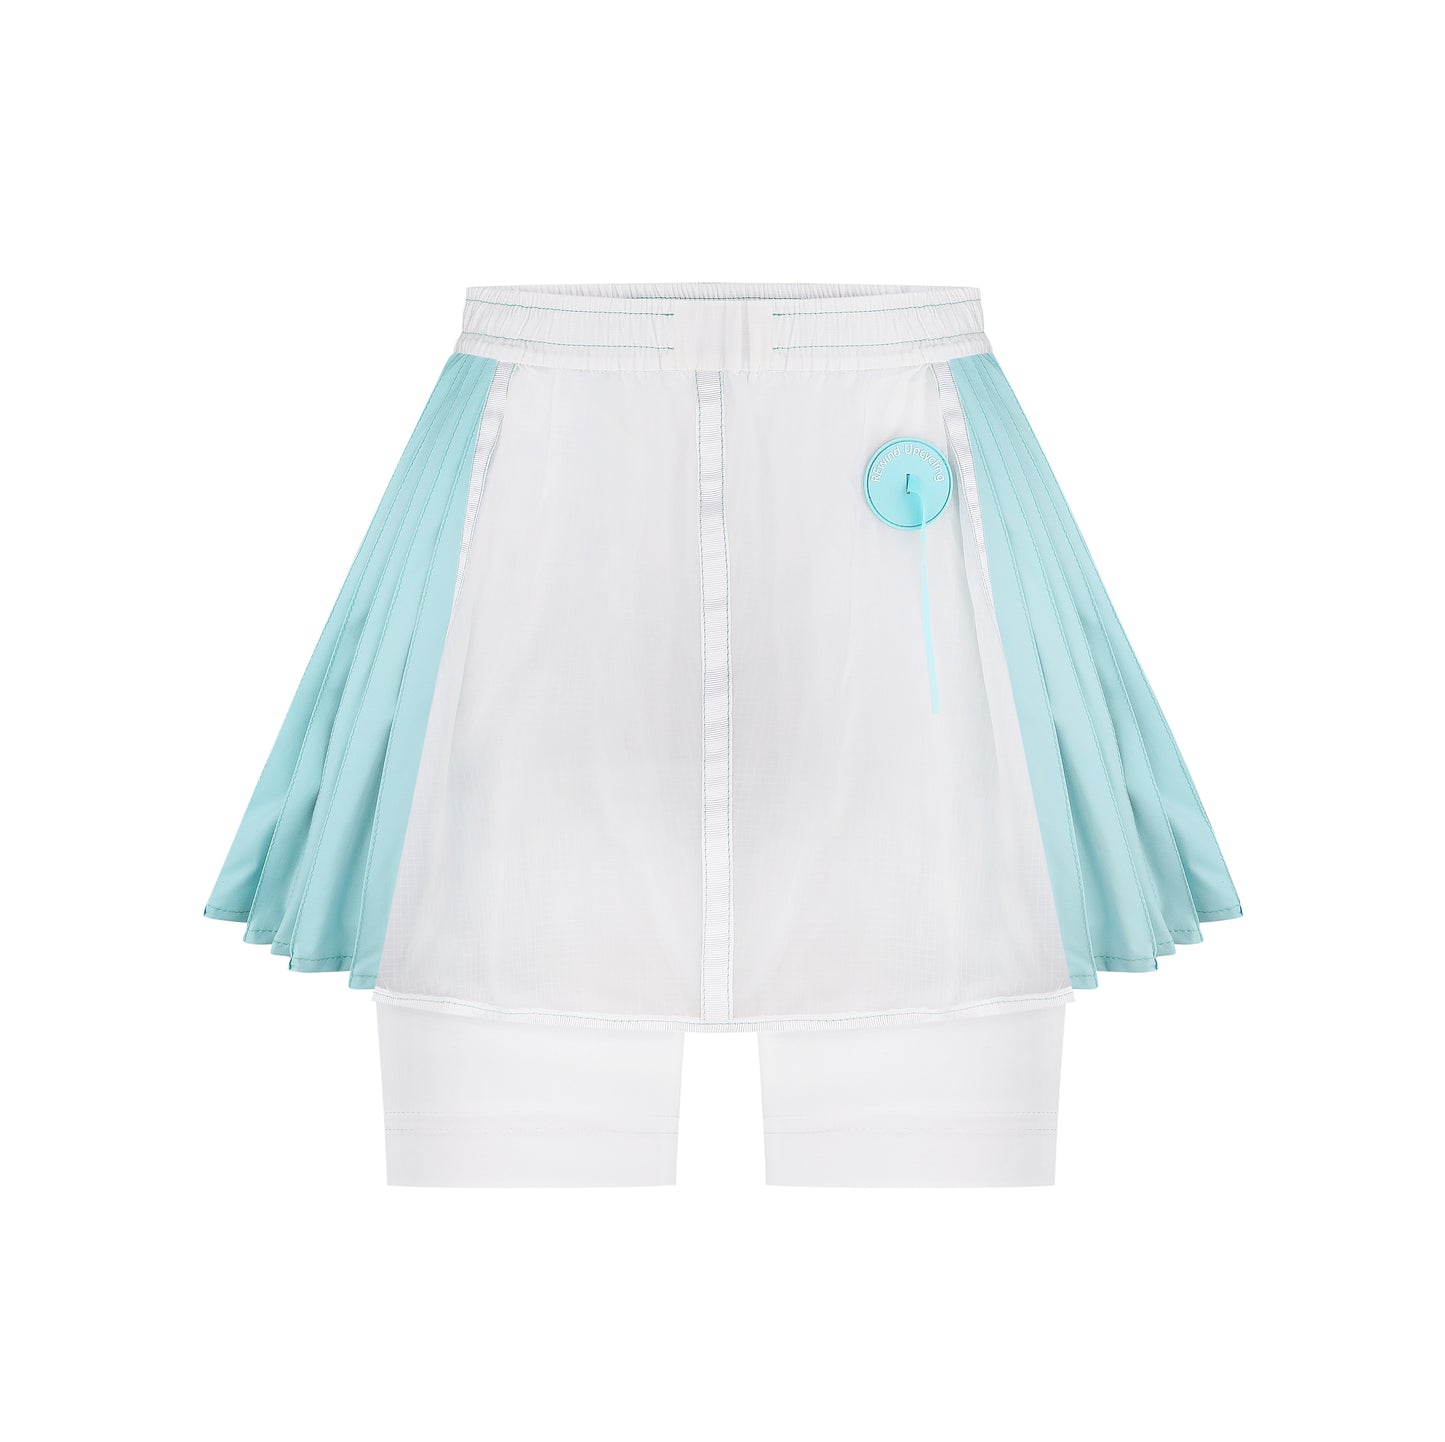 White and blue mini skirt shorts from Ukrainian manufacturer brand REwind